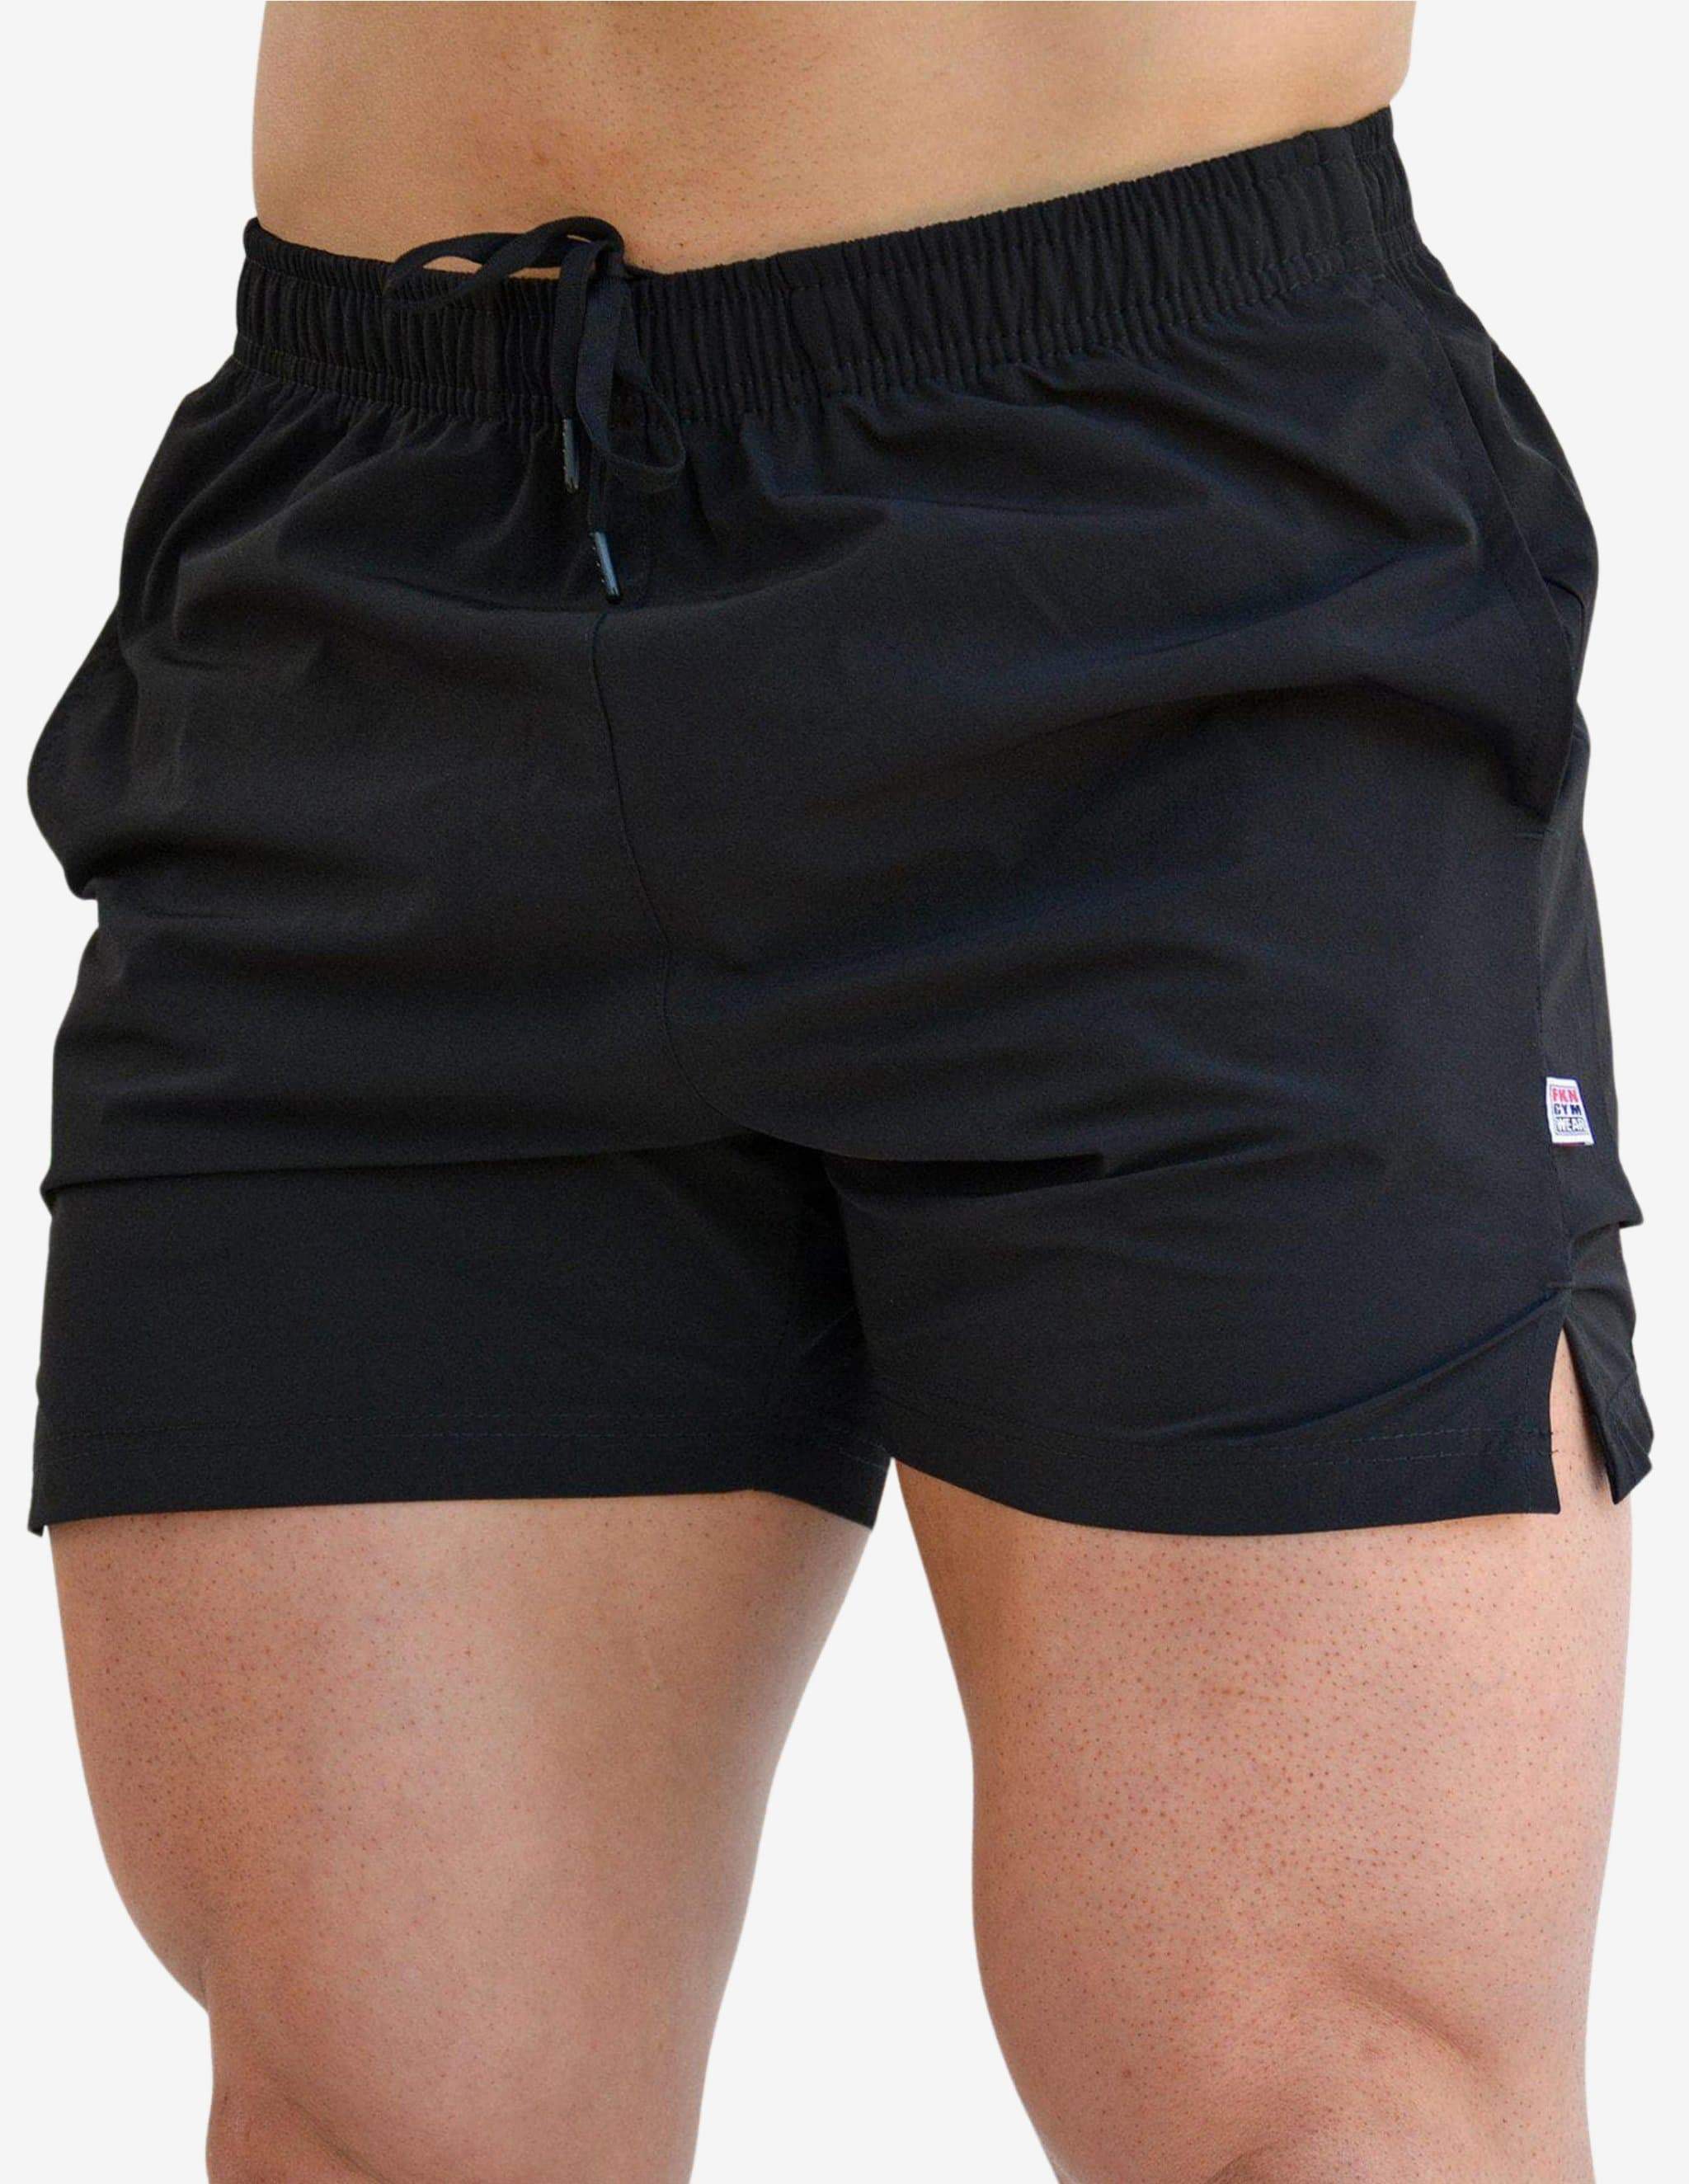 APOLLO BLACK-Shorts Man-FKN Gym Wear-Guru Muscle